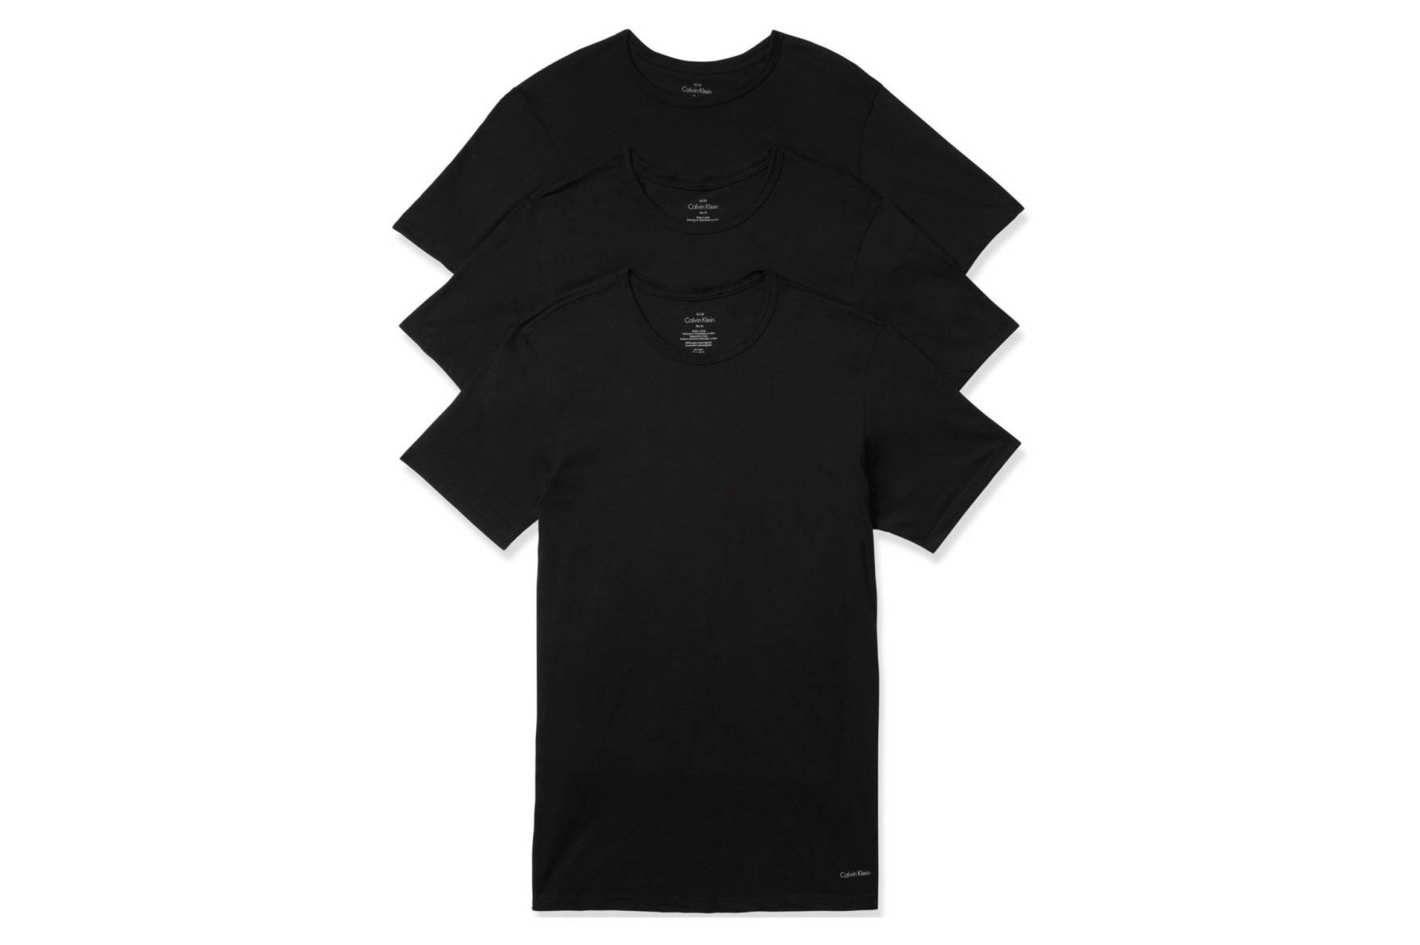 Best Black and White Logo - 13 Best Black T-shirts for Men 2018